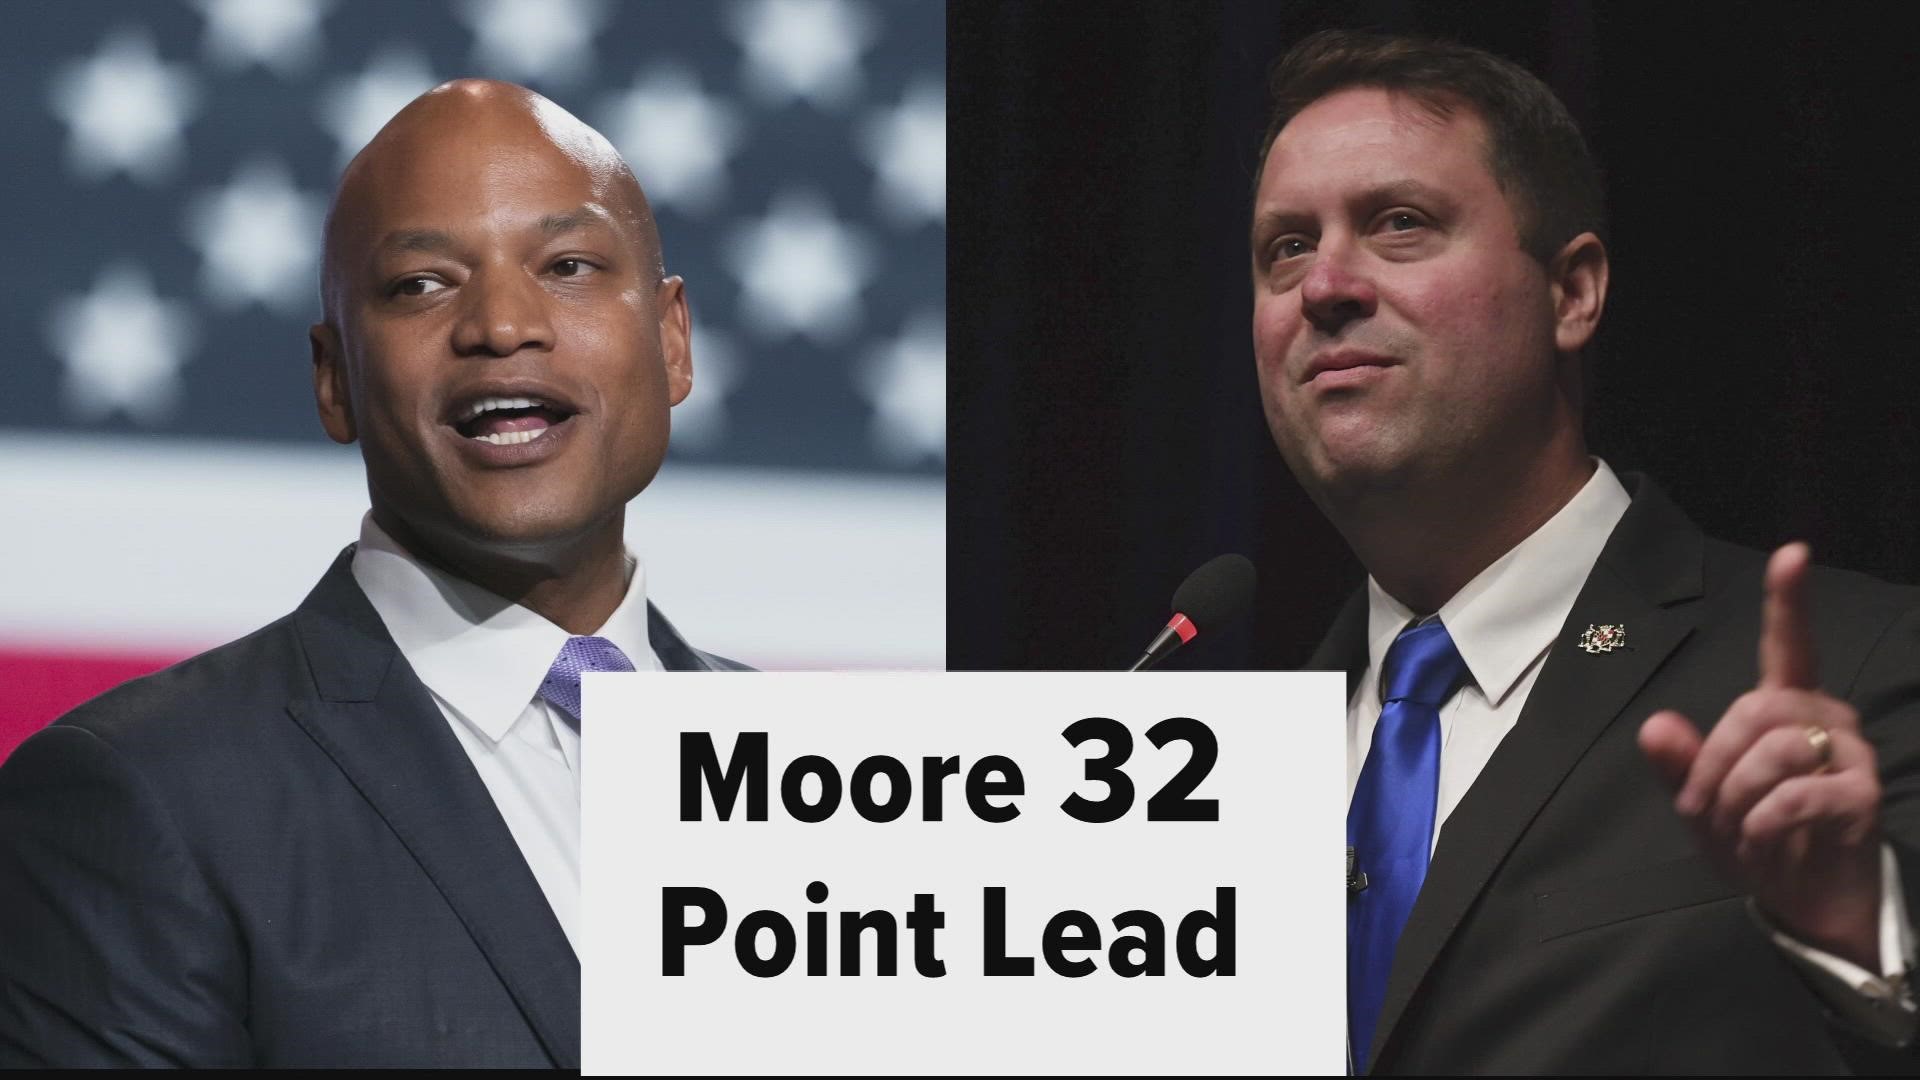 A Washington Post poll says Moore has a 32-point lead.